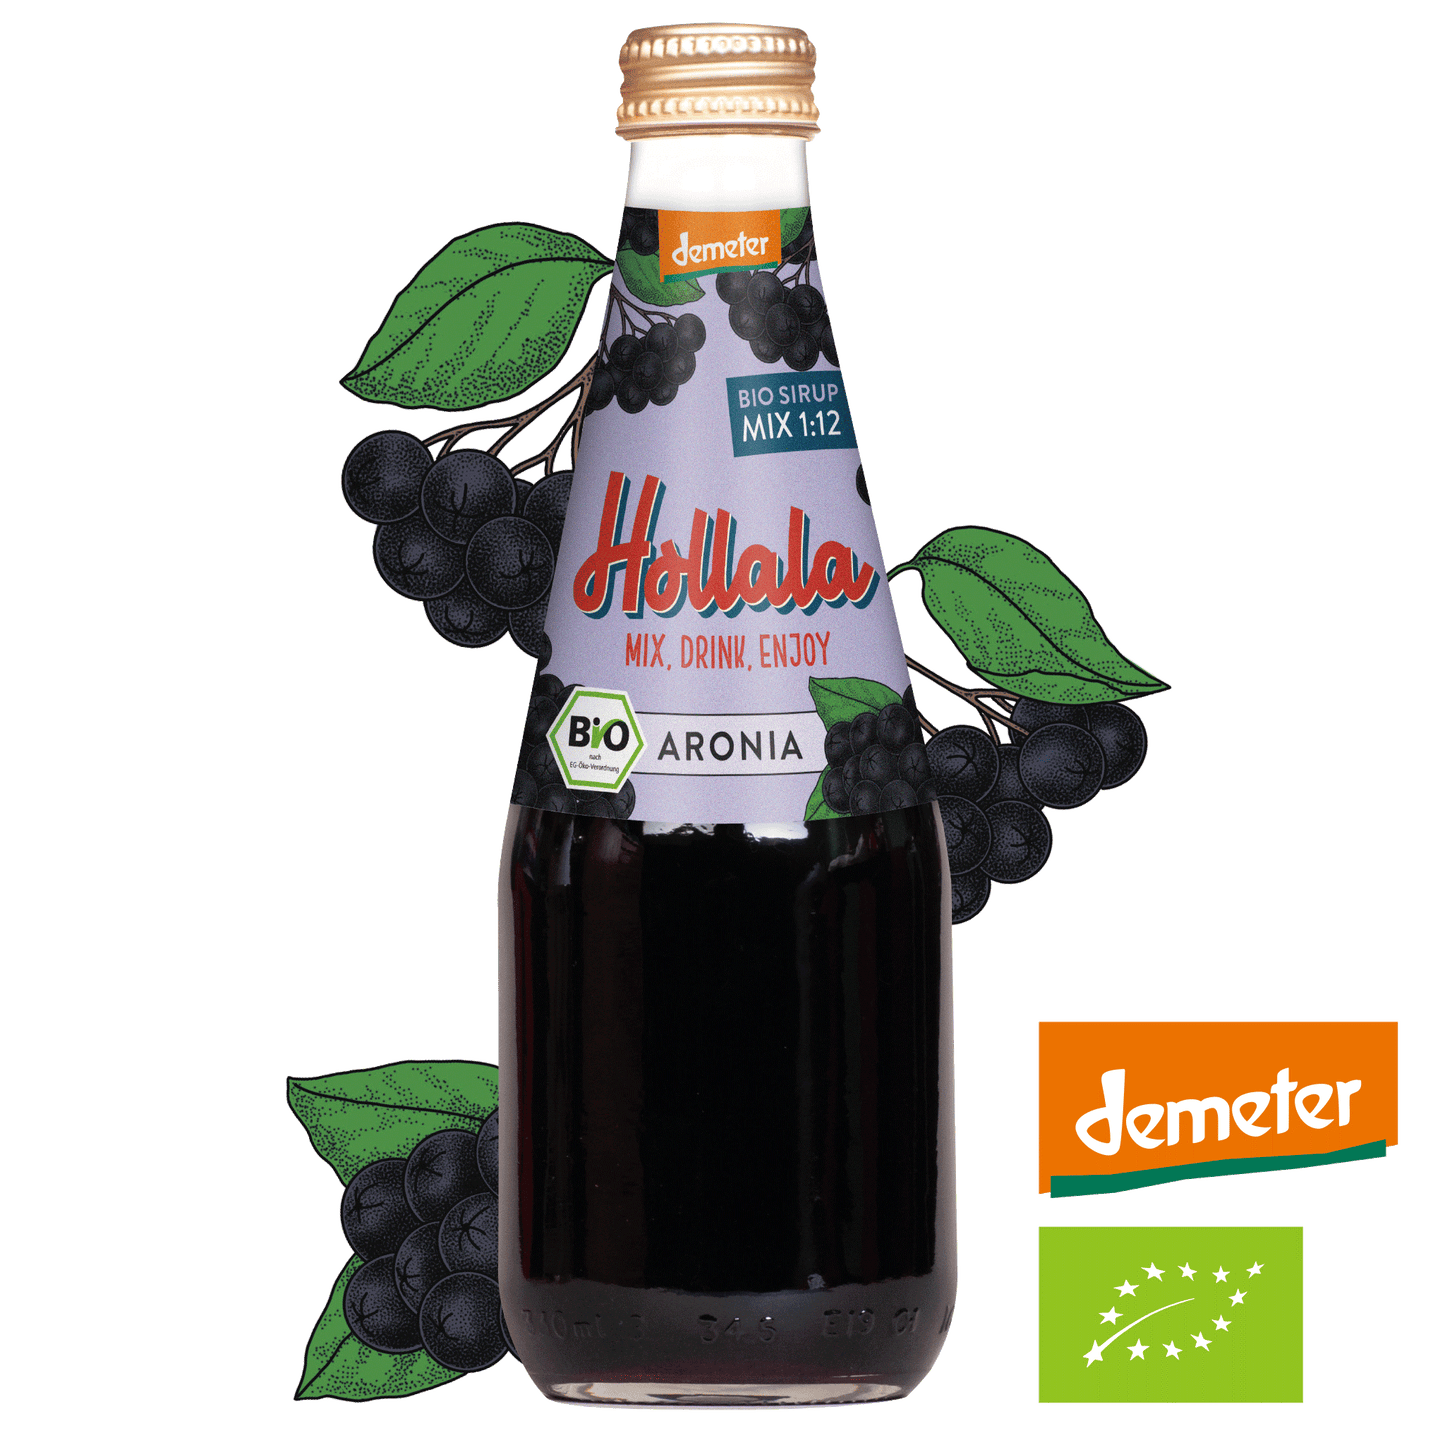 HOLLALA - Bio (Demeter) Sirup Aronia 330ml - Hollala - mix.drink.enjoy!